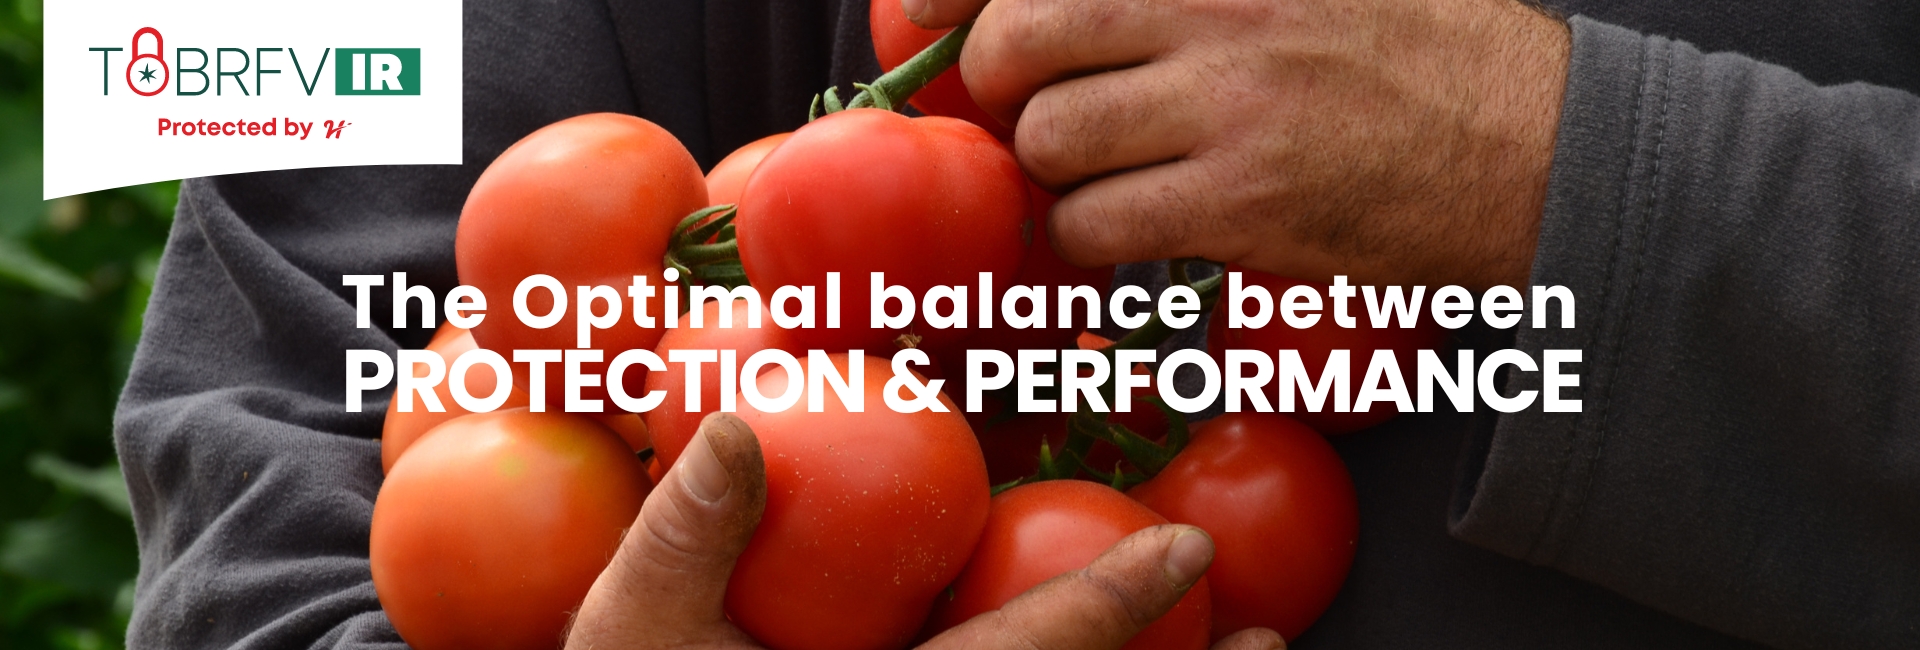 ToBRFV - The optimal balance between protection and performance